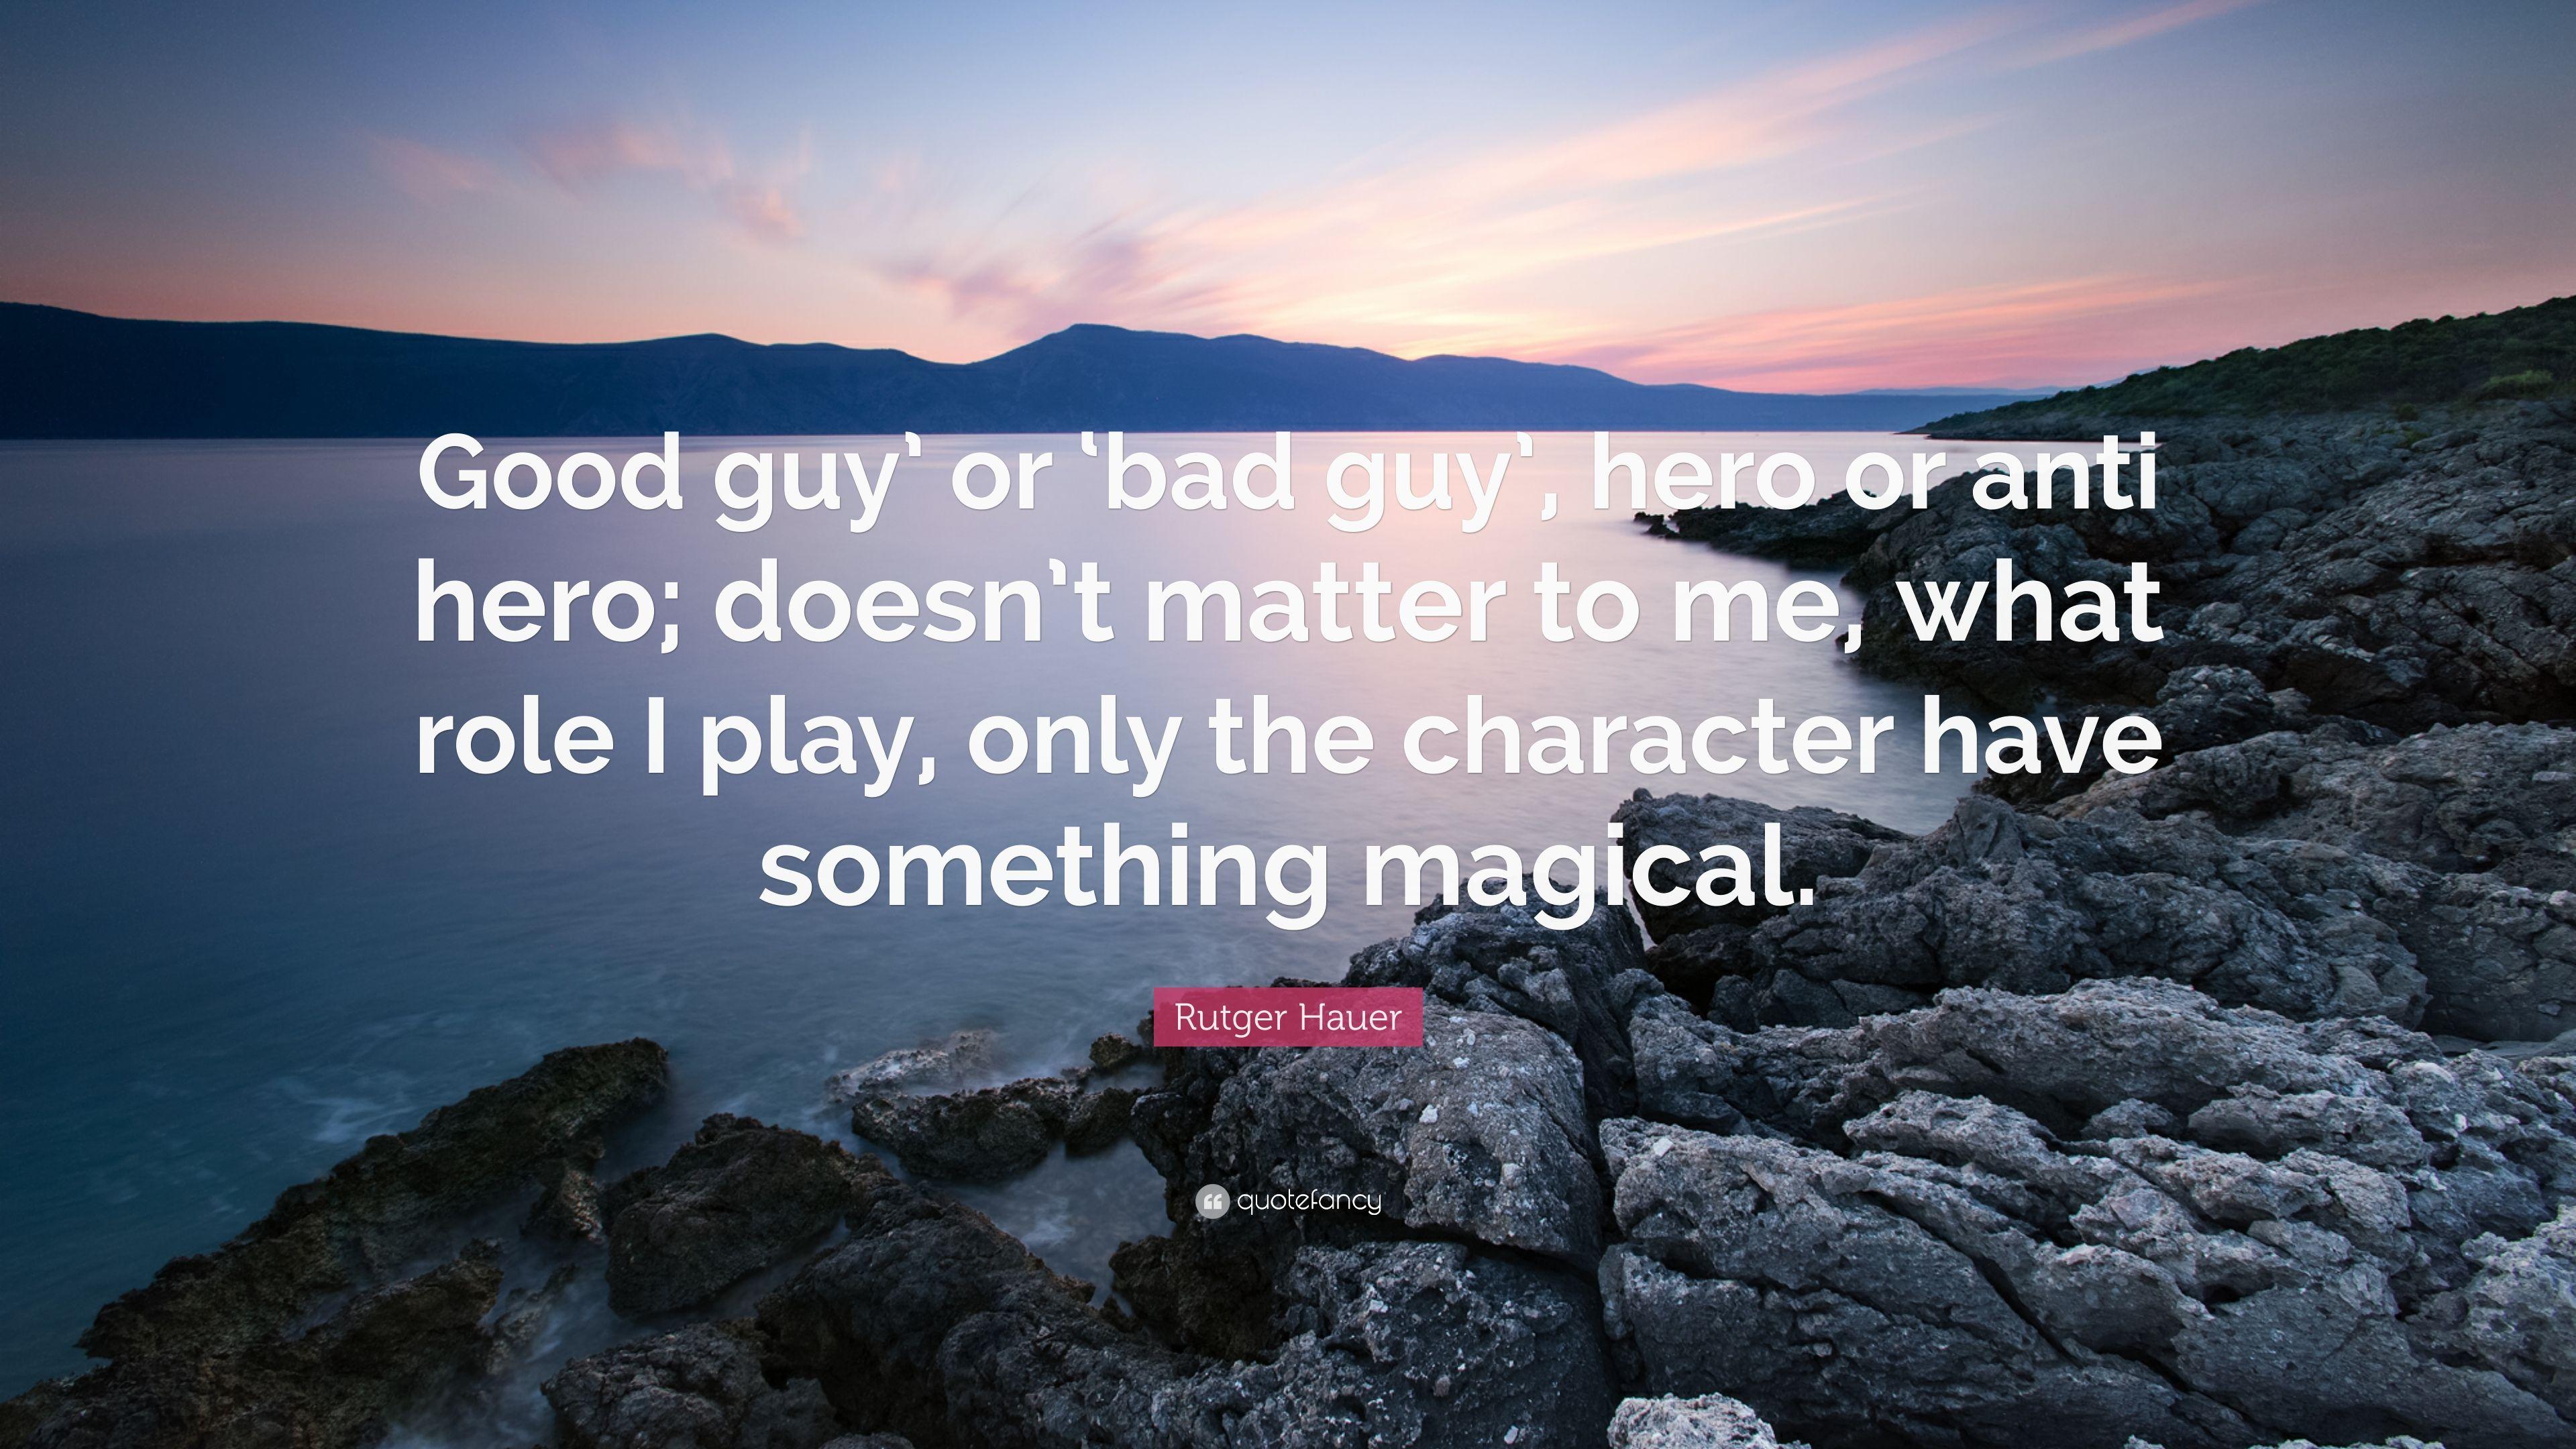 Rutger Hauer Quote: “Good guy' or 'bad guy', hero or anti hero